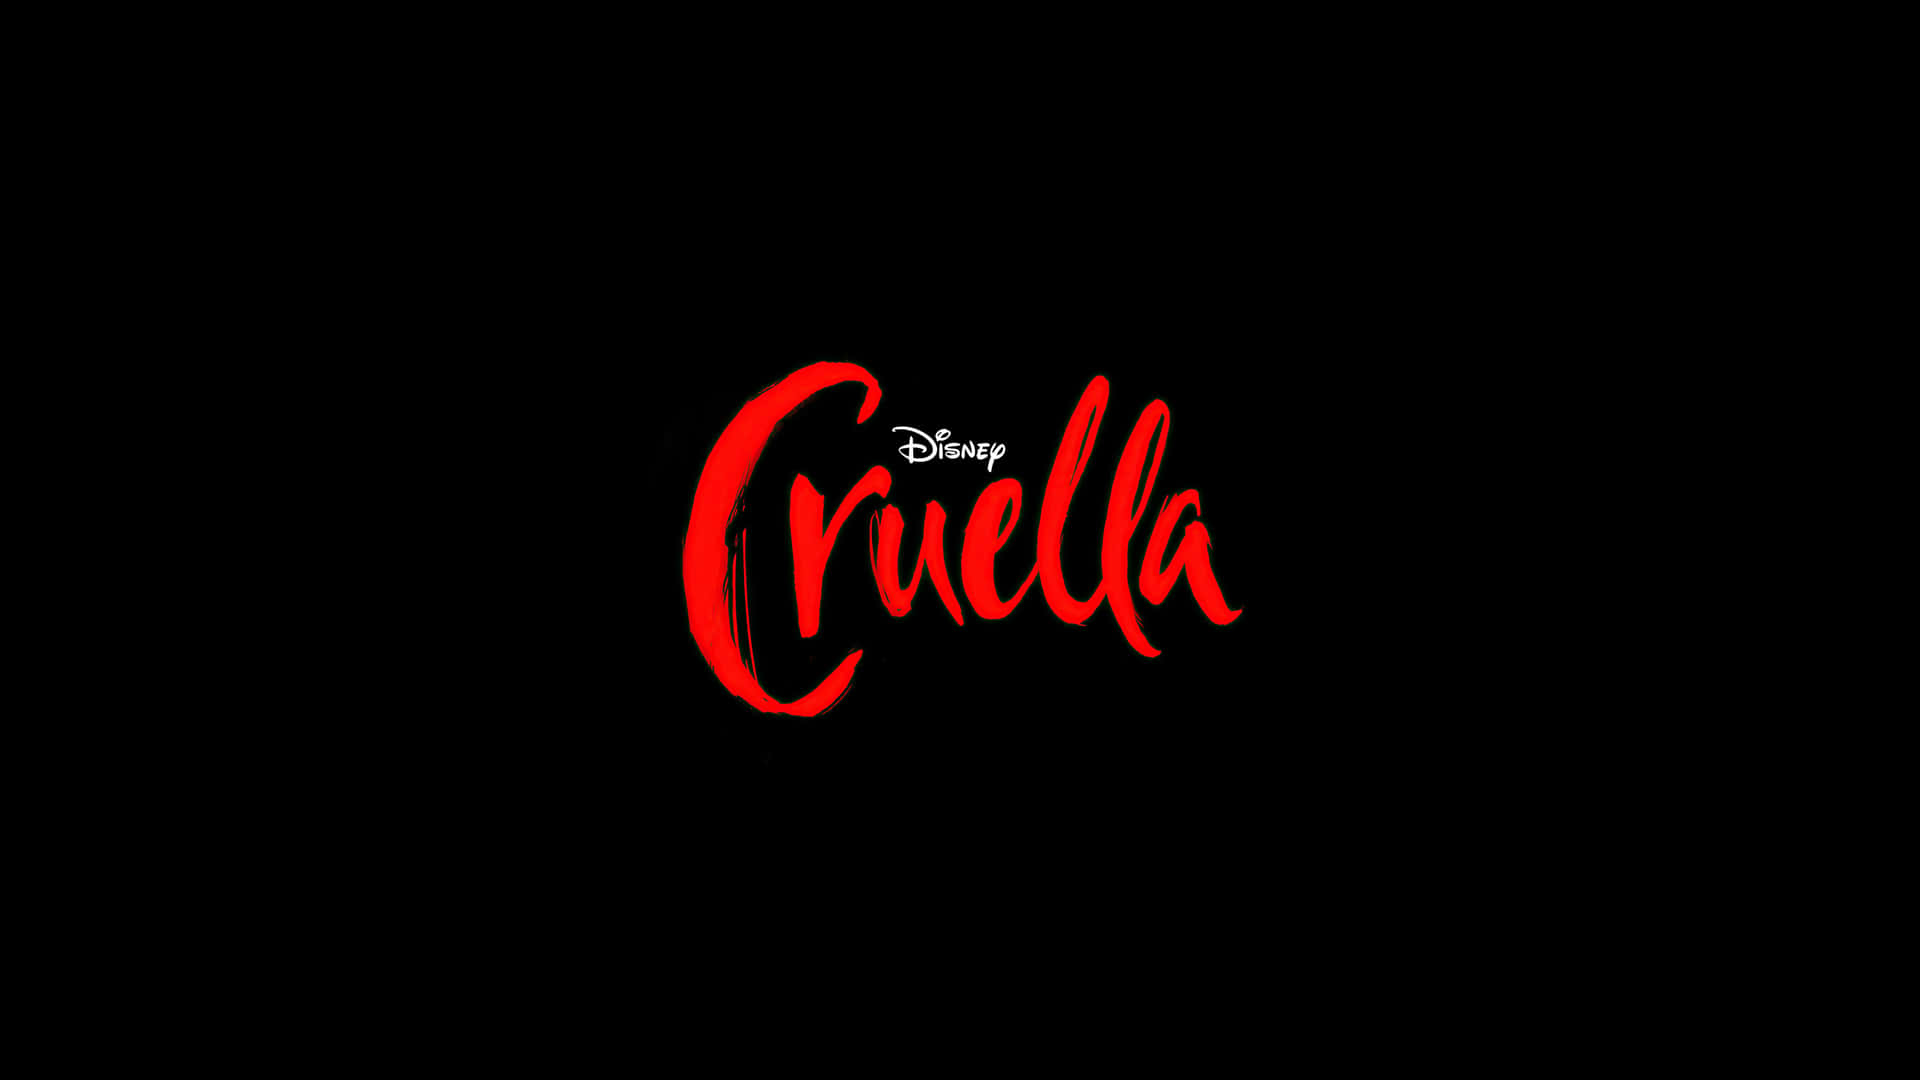 Experience the mischievous fun of Emma Stone in Disney's Cruella